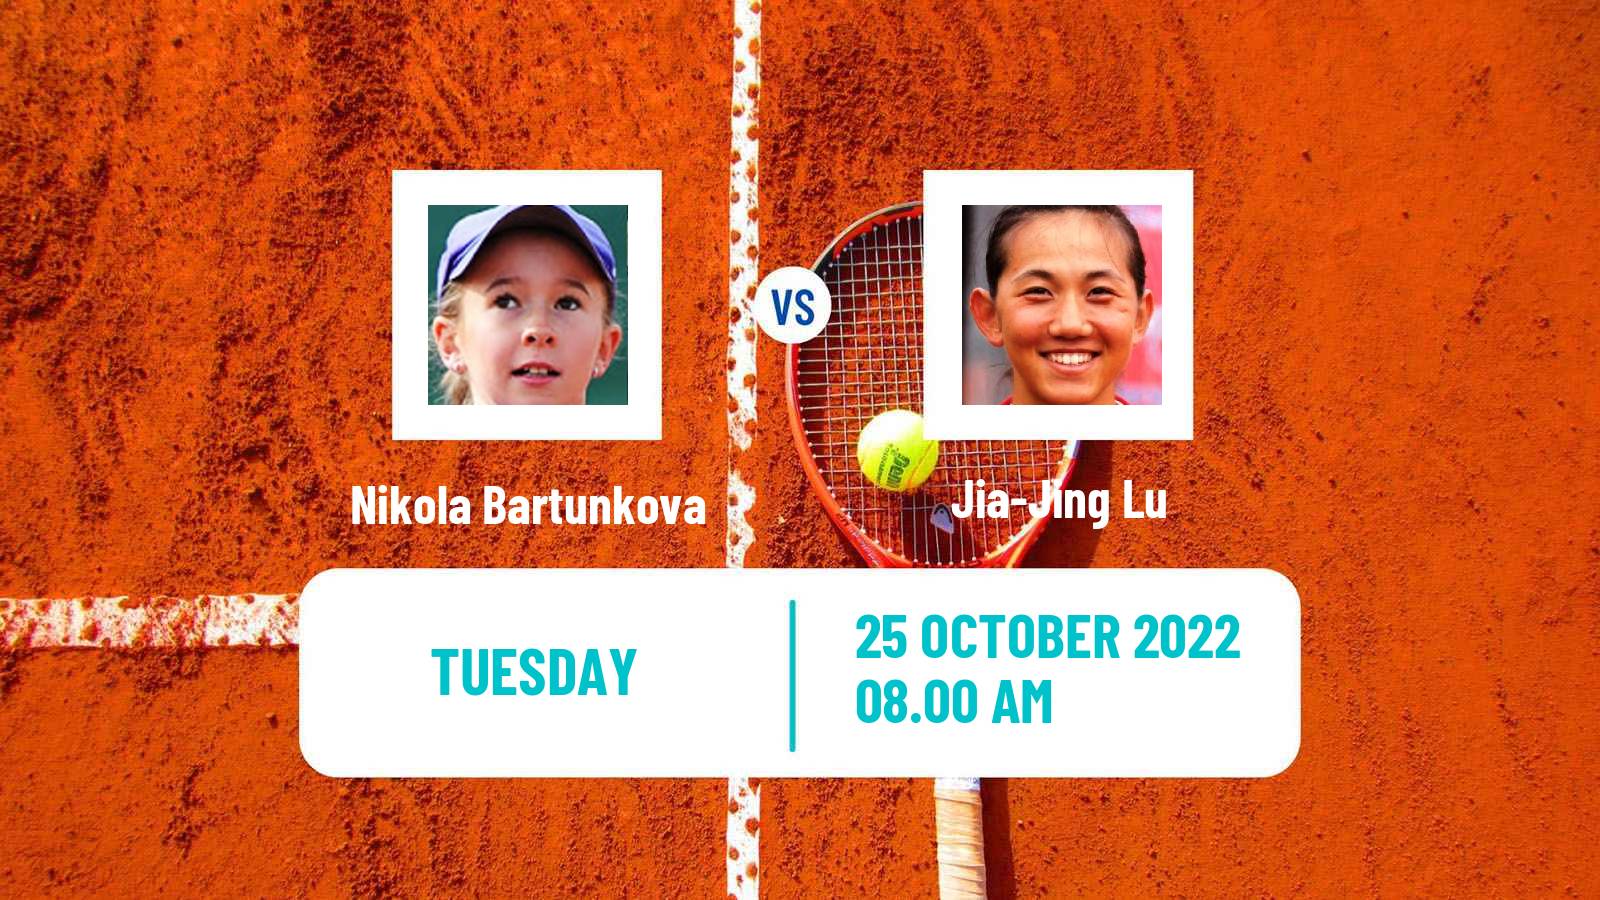 Tennis ITF Tournaments Nikola Bartunkova - Jia-Jing Lu